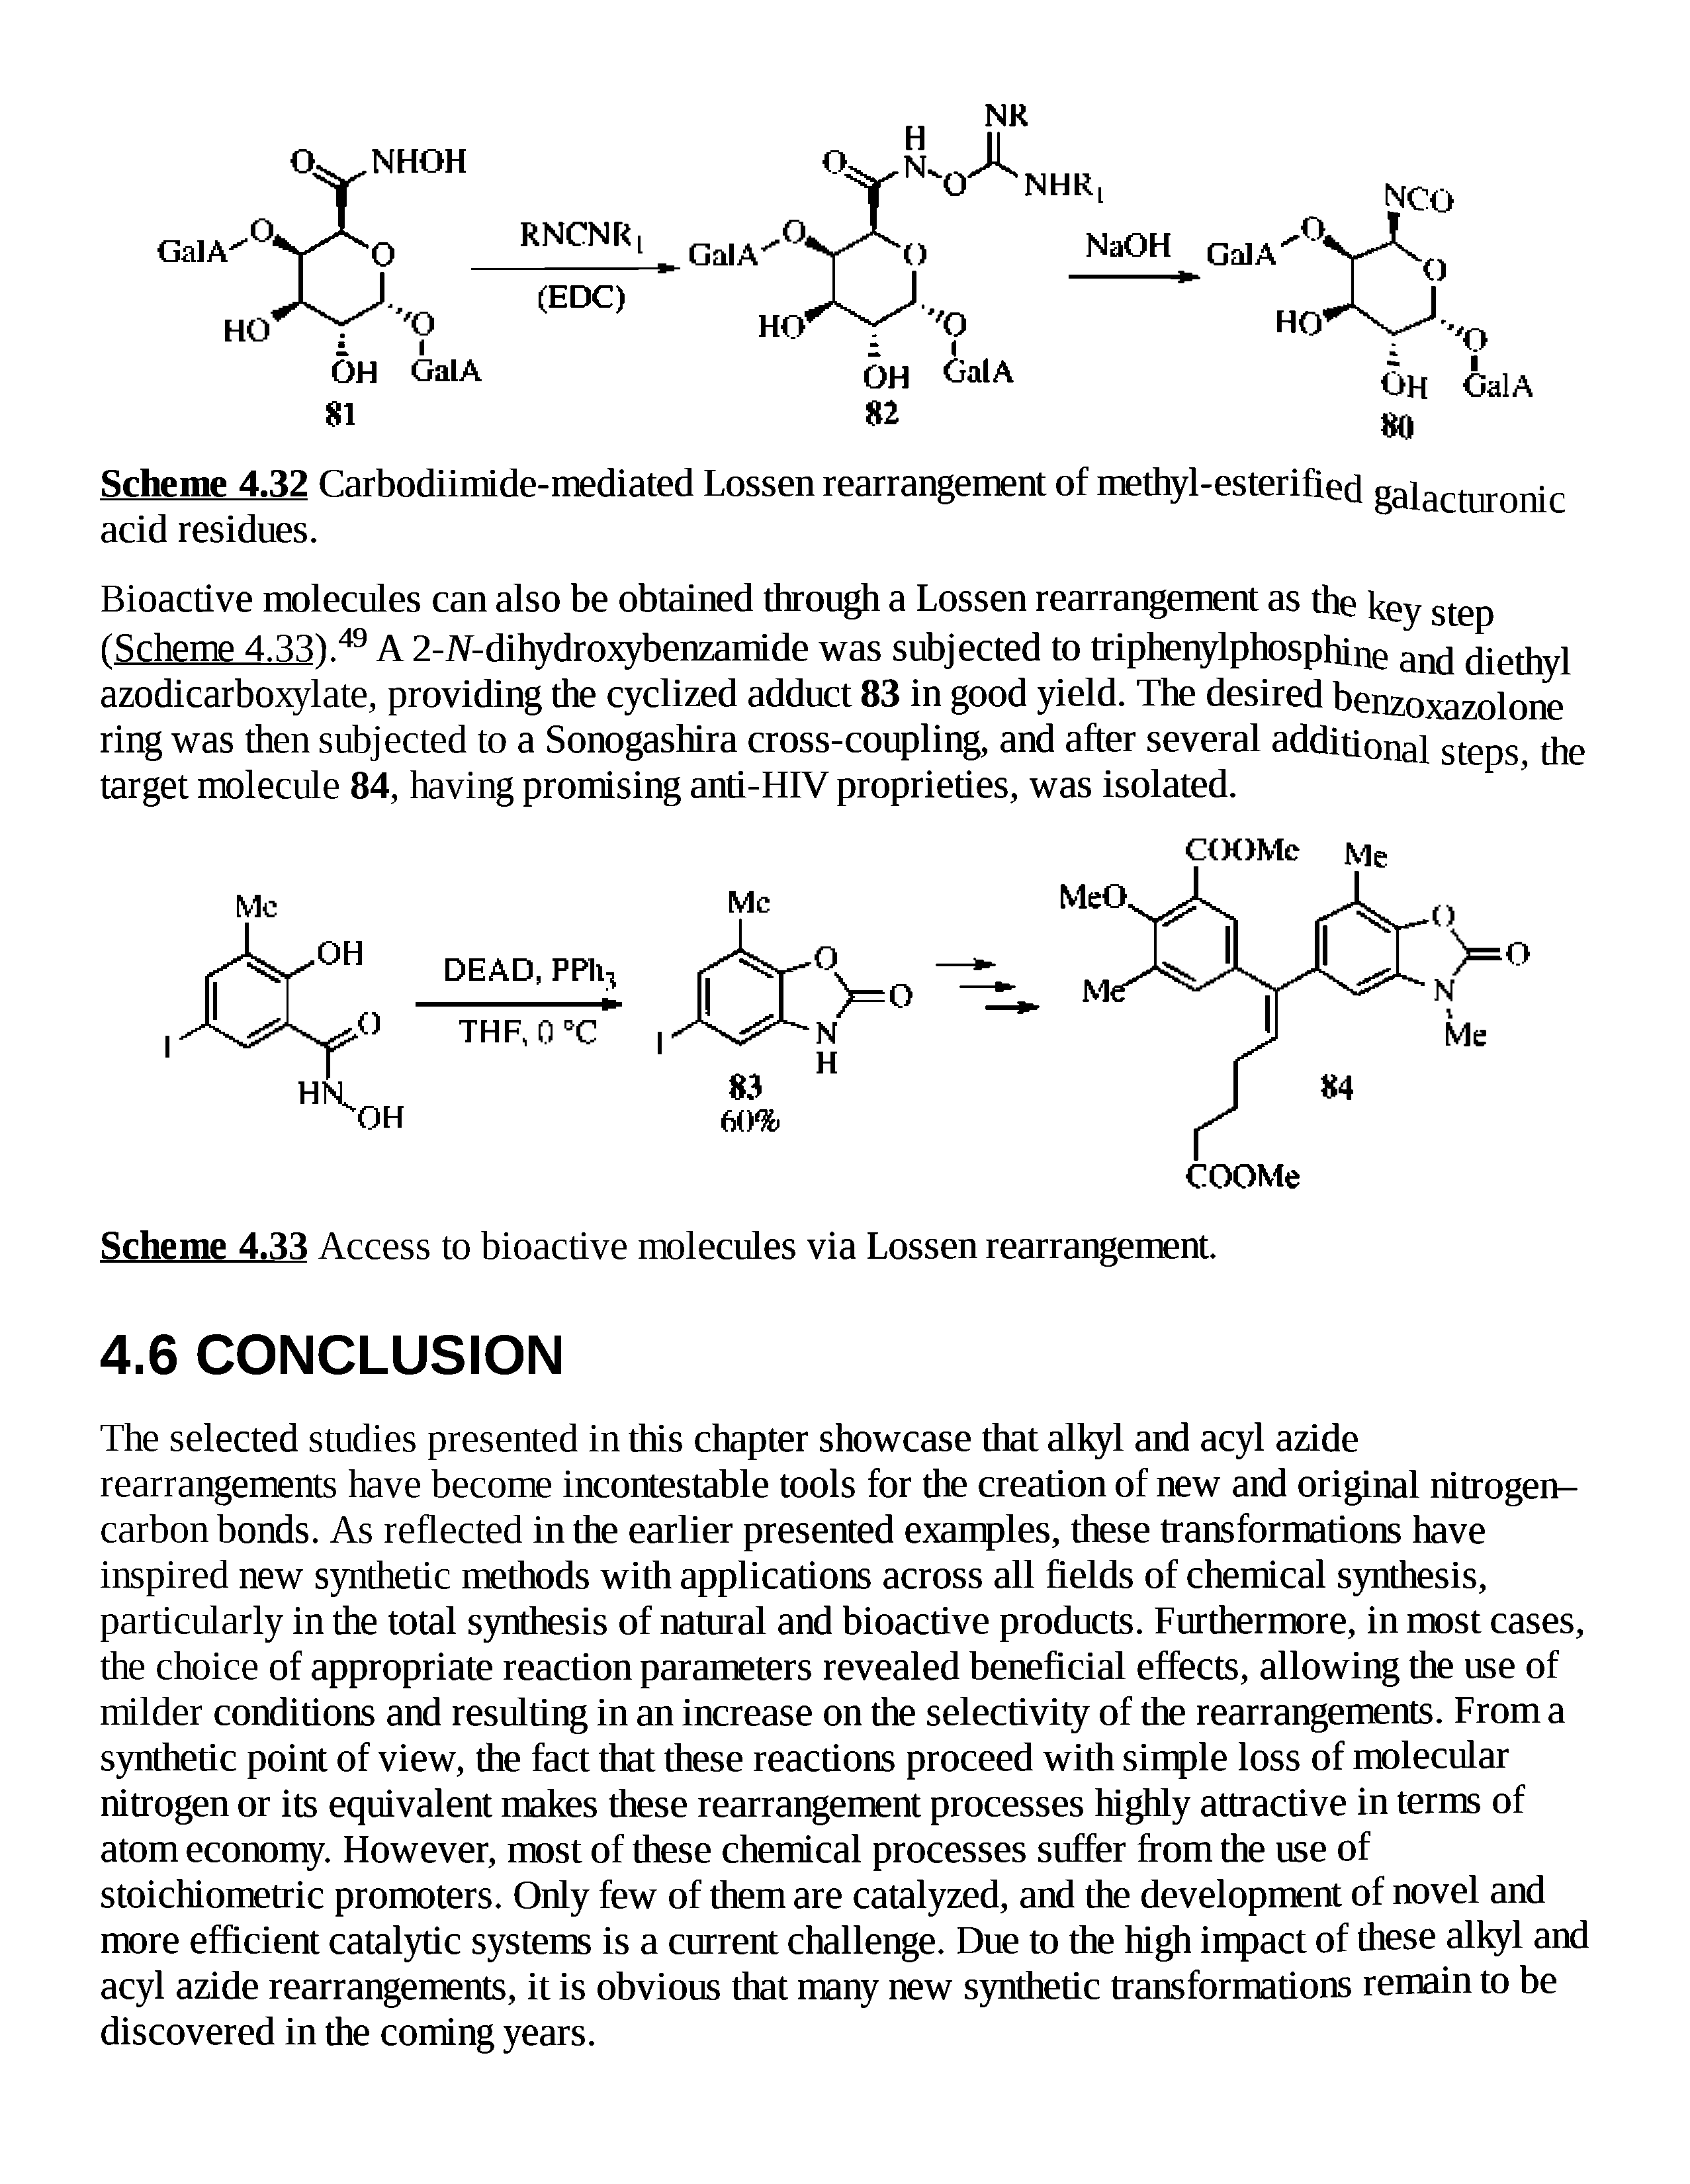 Scheme 4.32 Carbodiimide-mediated Lossen rearrangement of methyl-esterified galacturonic acid residues.